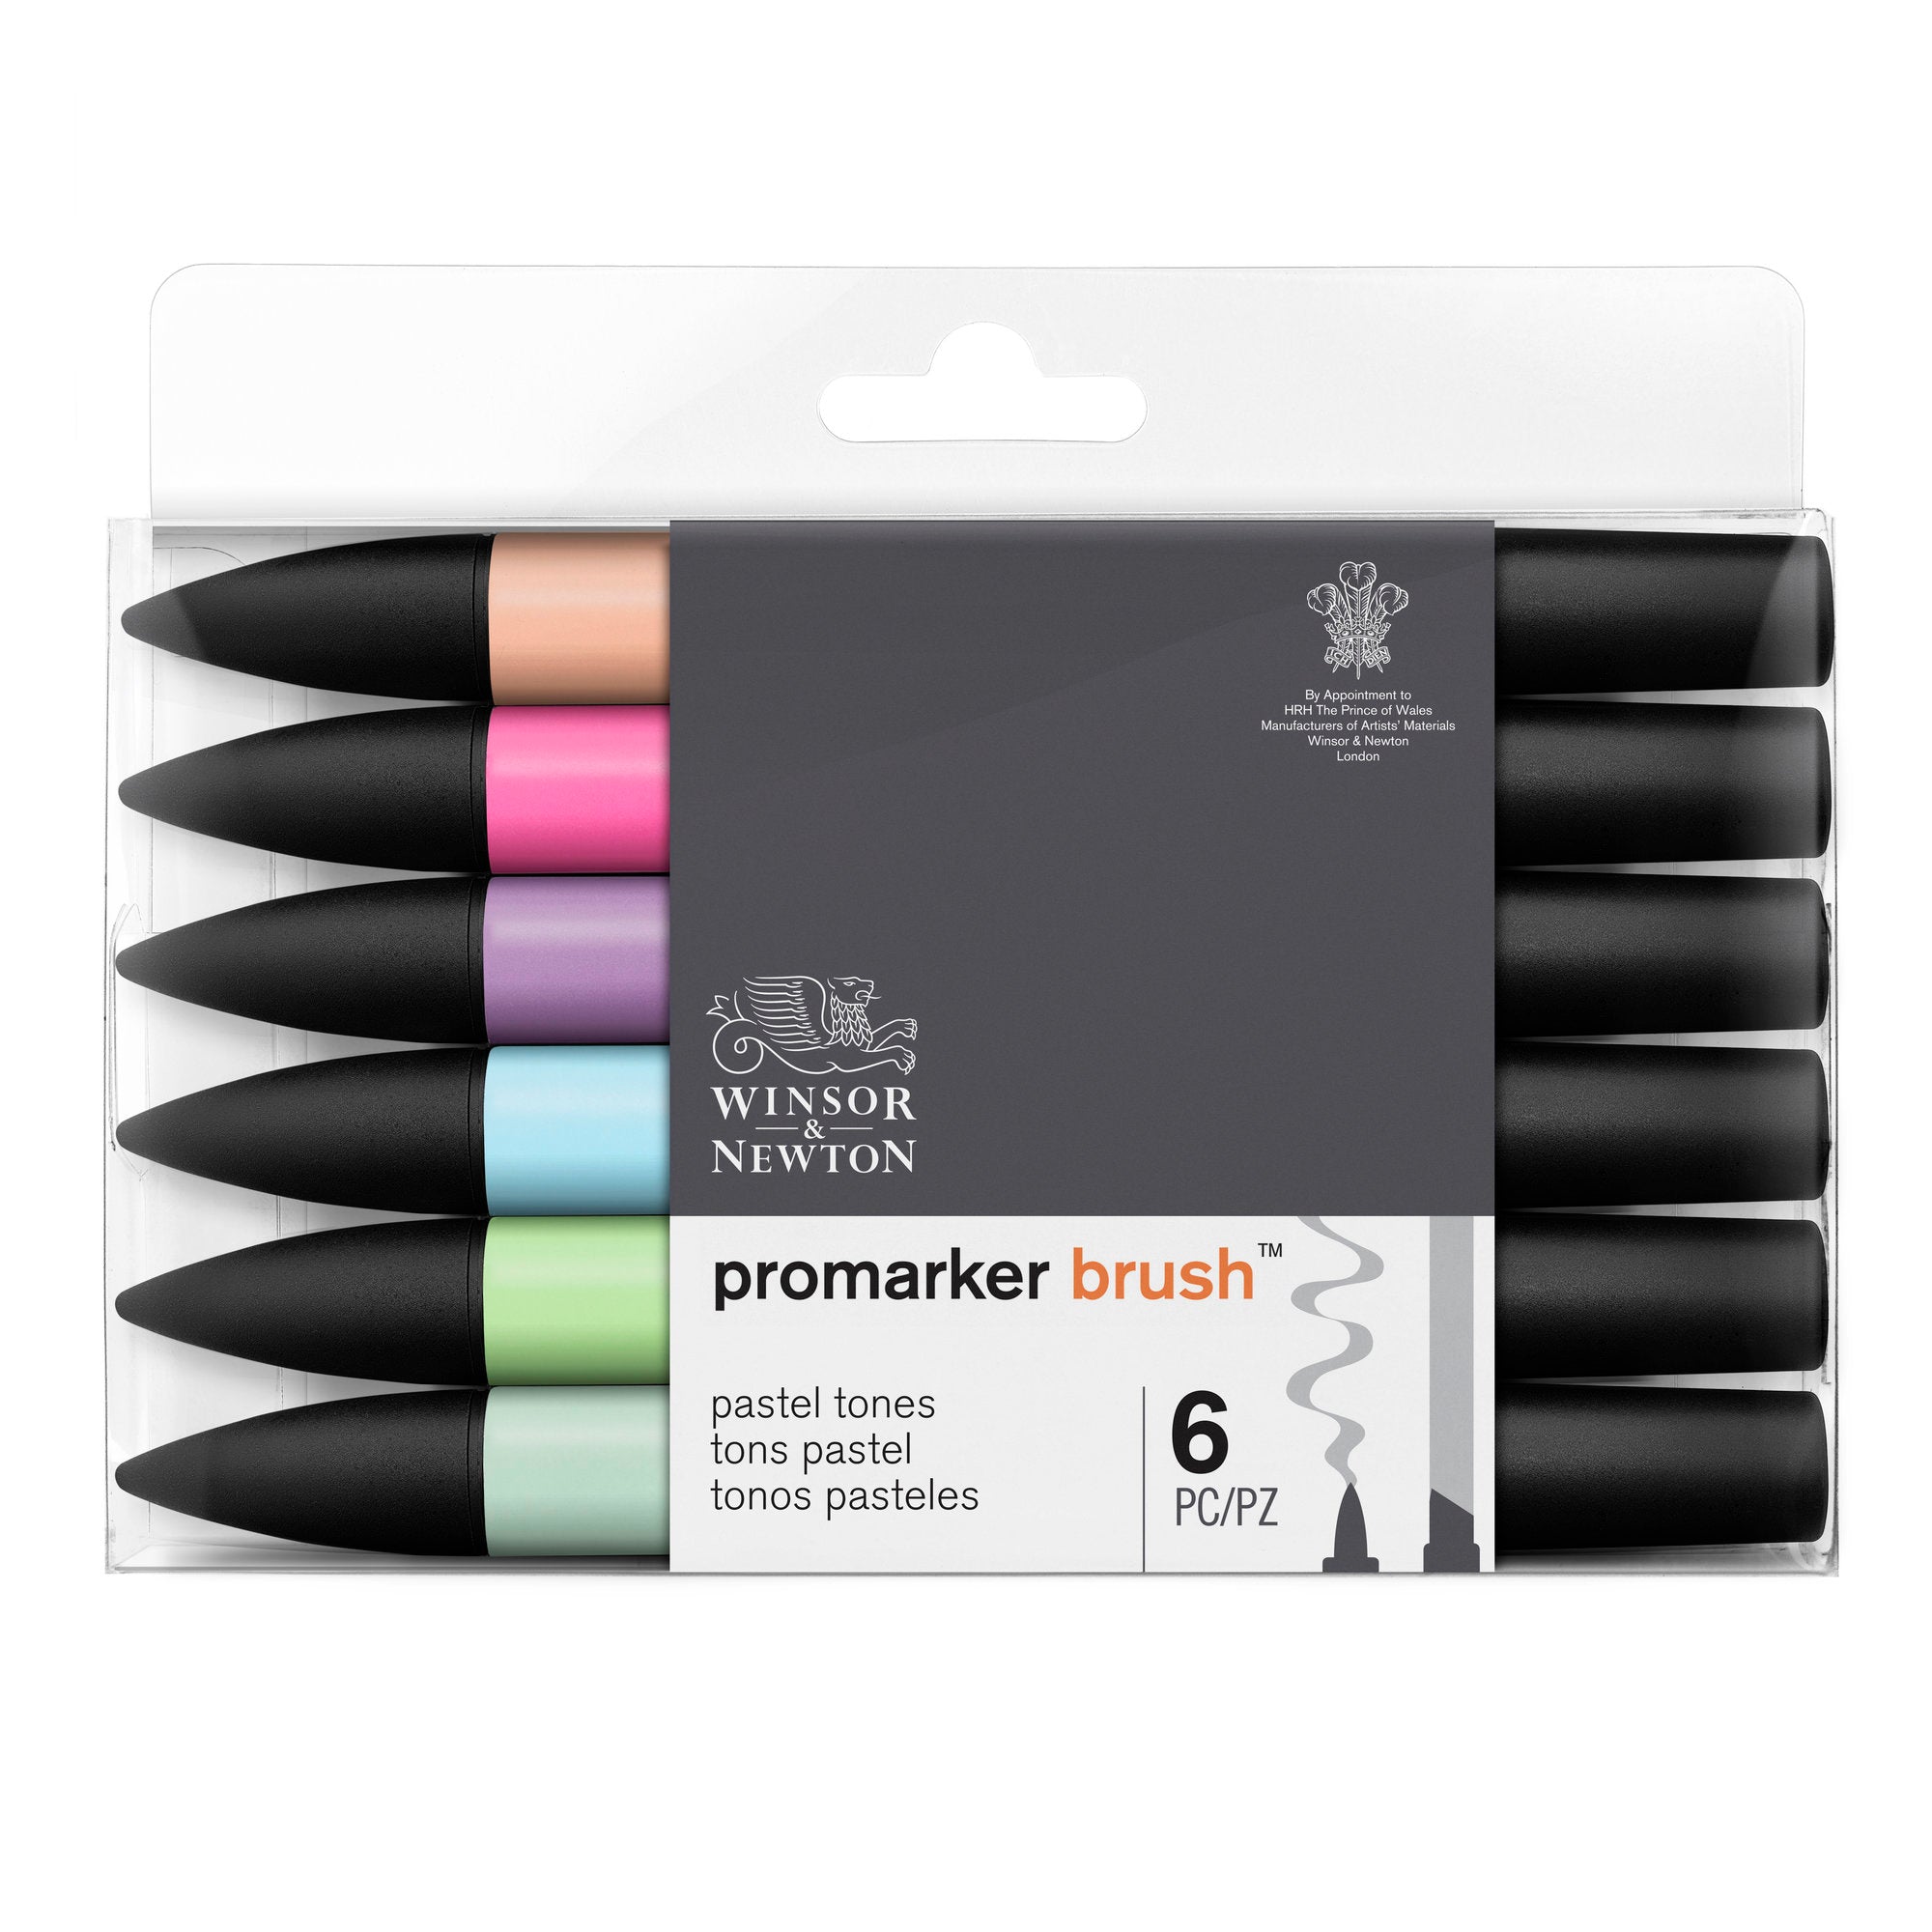 Winsor & Newton Promarker BRUSH - Set of 6 Pastel Tones